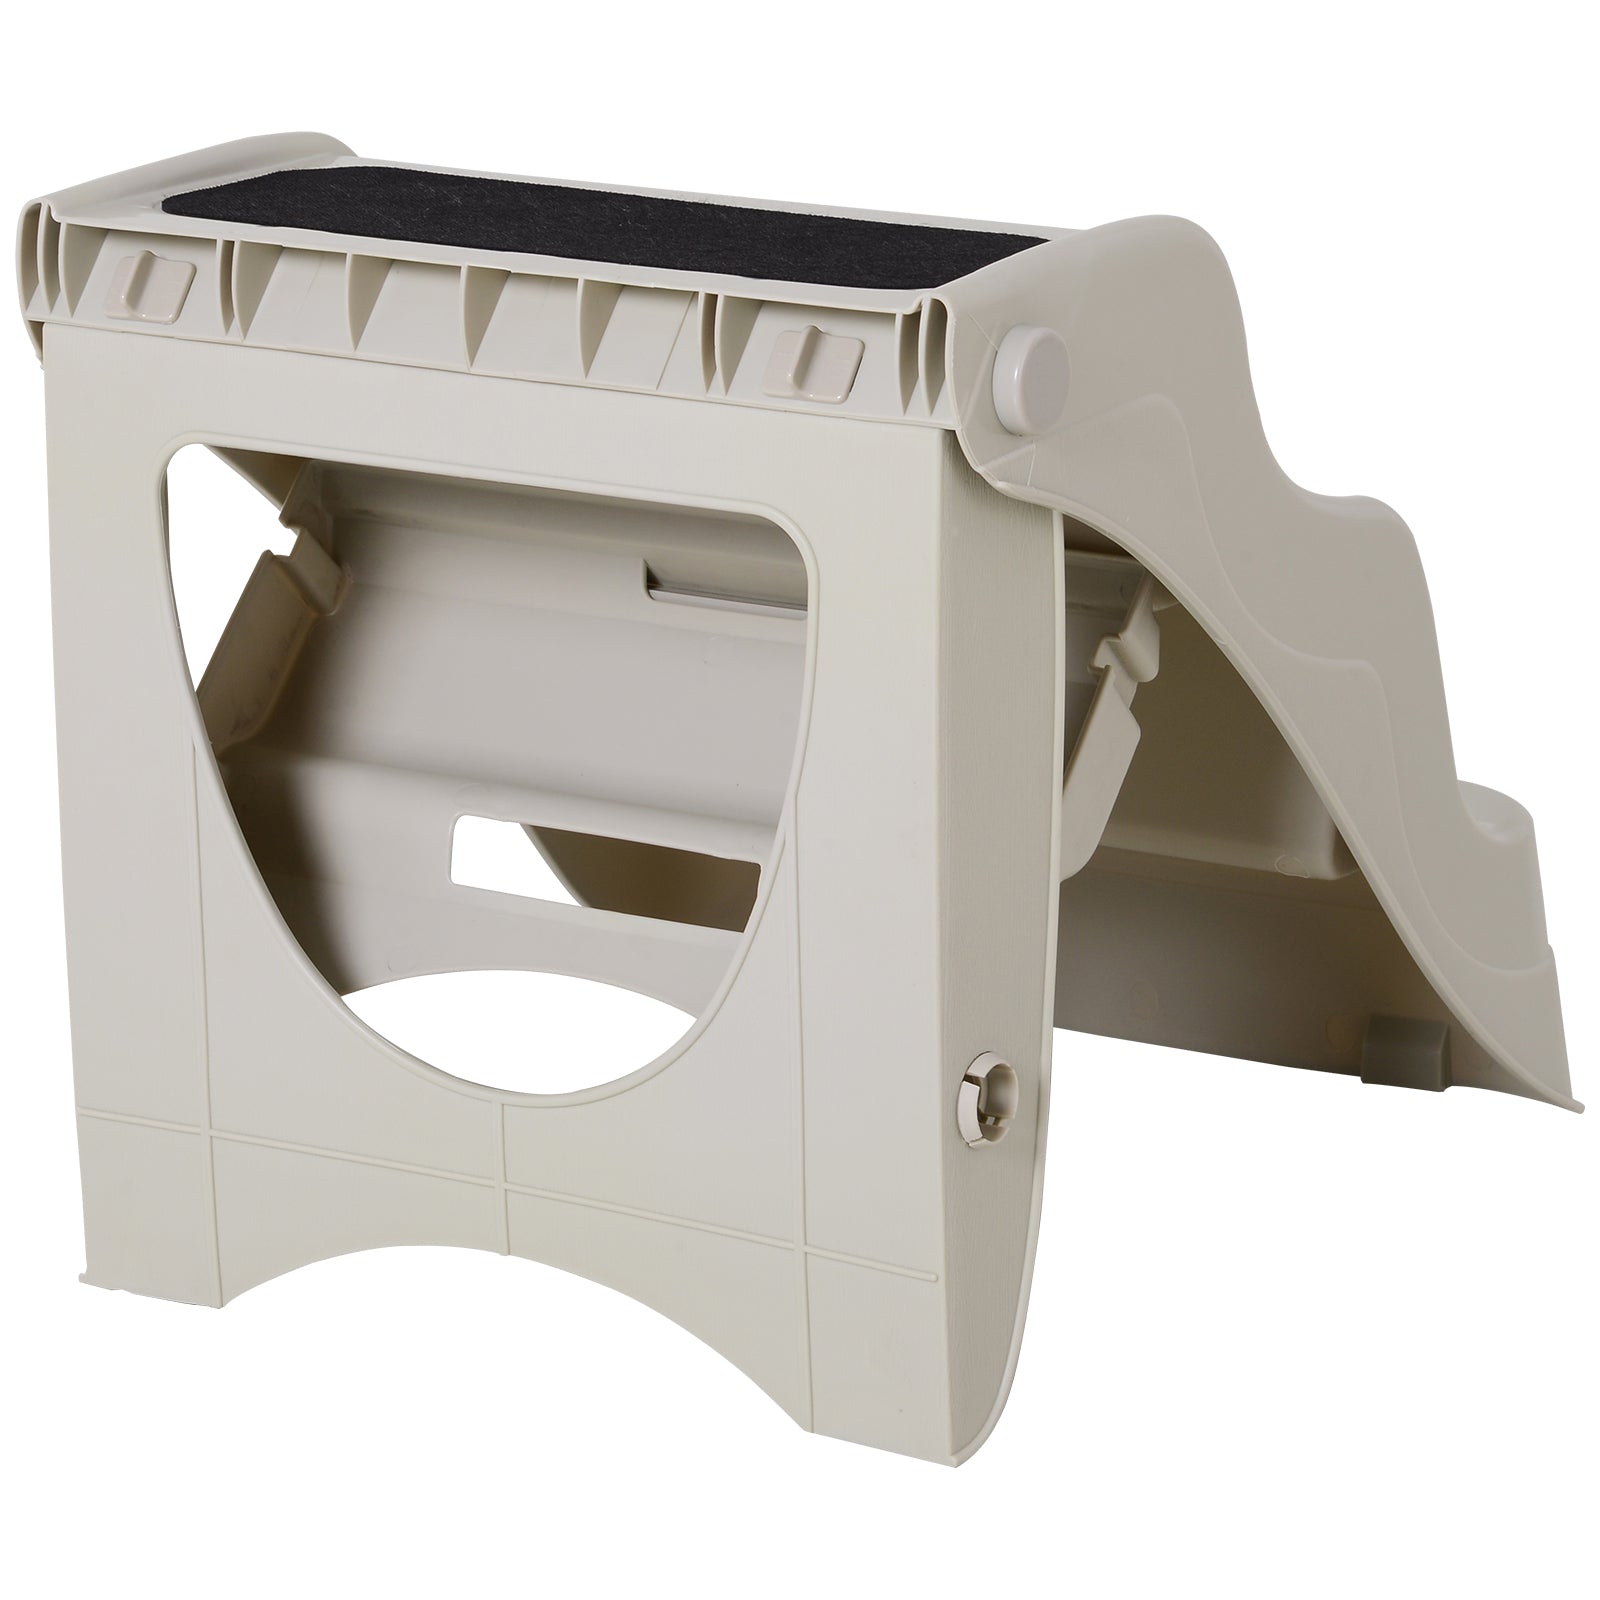 PVC Foldable Pet Stairs Cream White